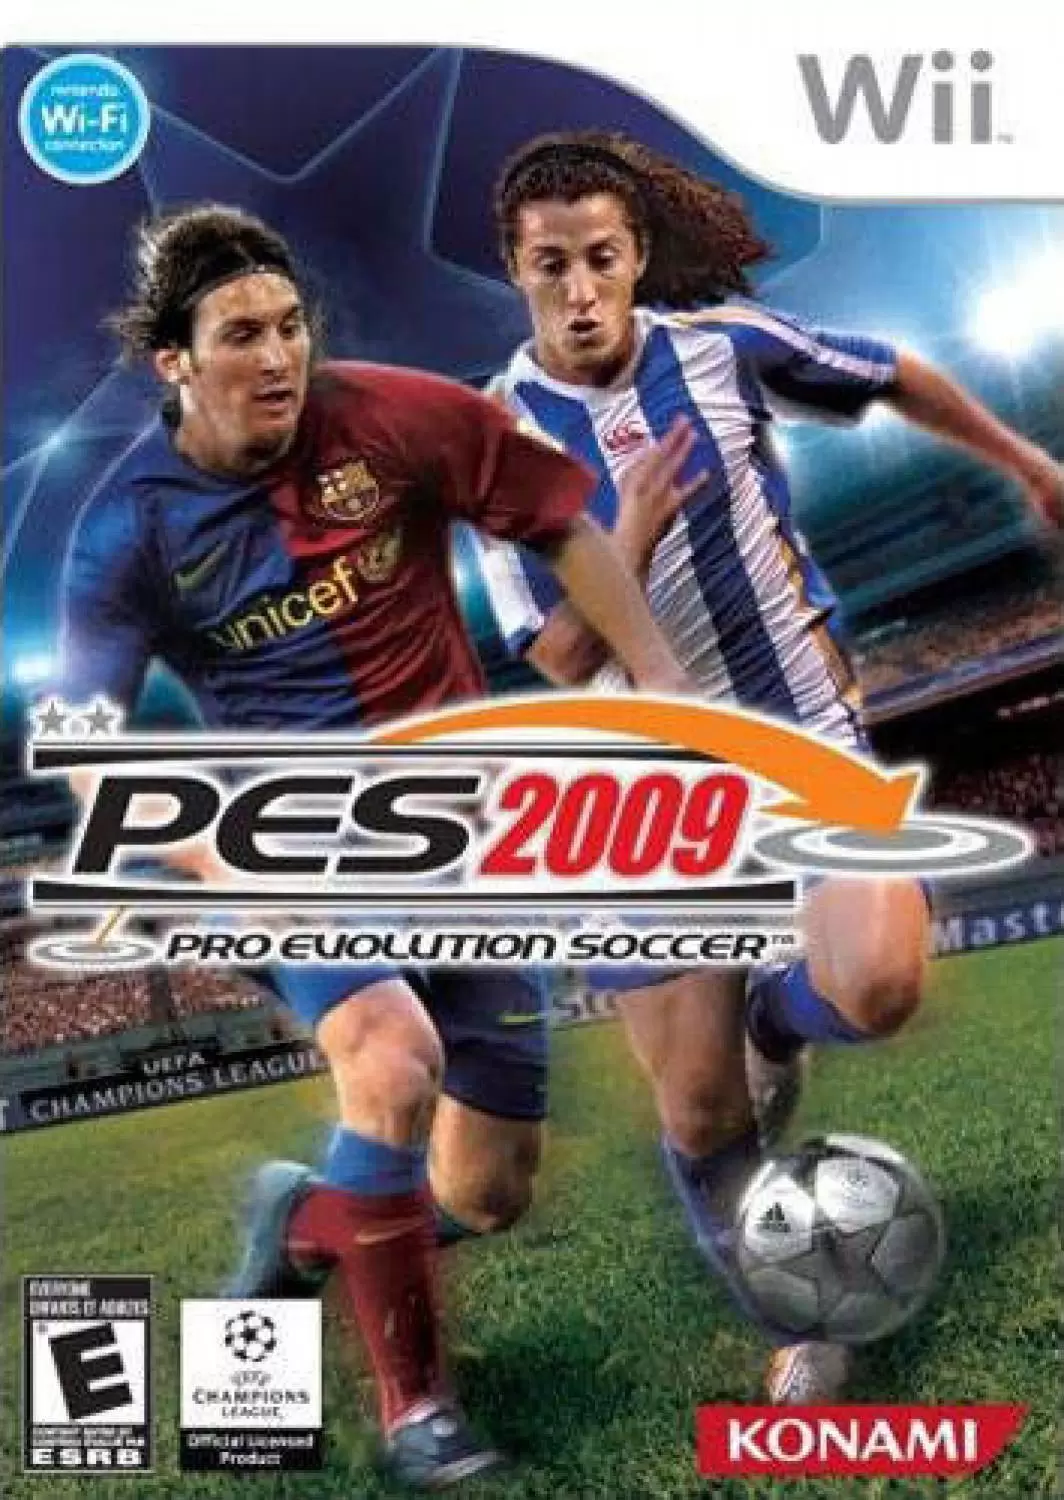 Nintendo Wii Games - Pro Evolution Soccer 2009